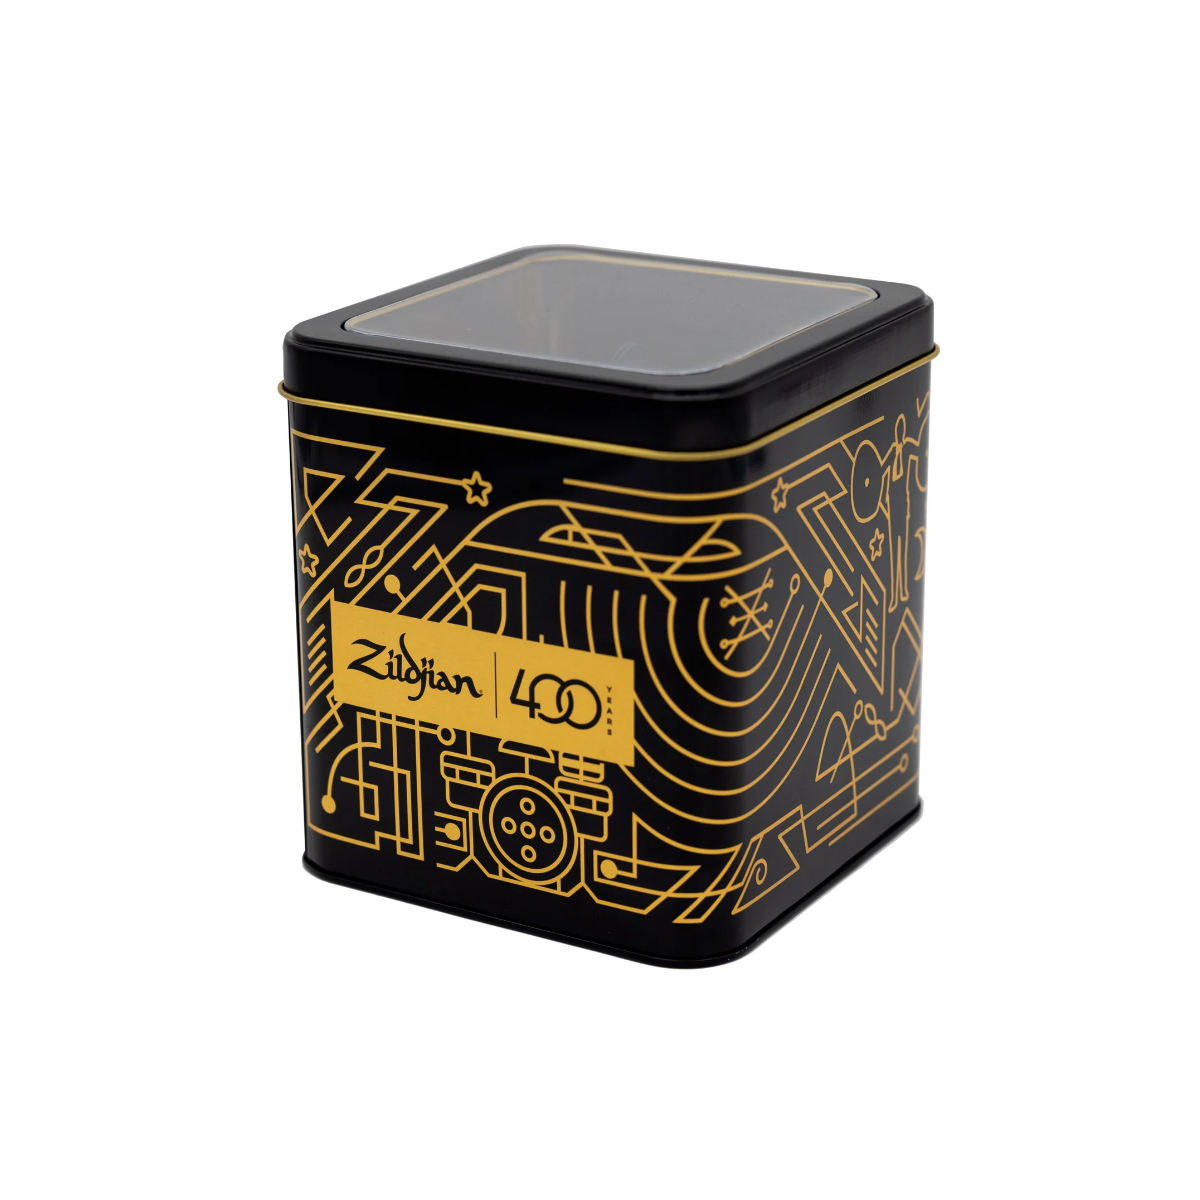 Zildjian Box 400th Anniversary, comprar online